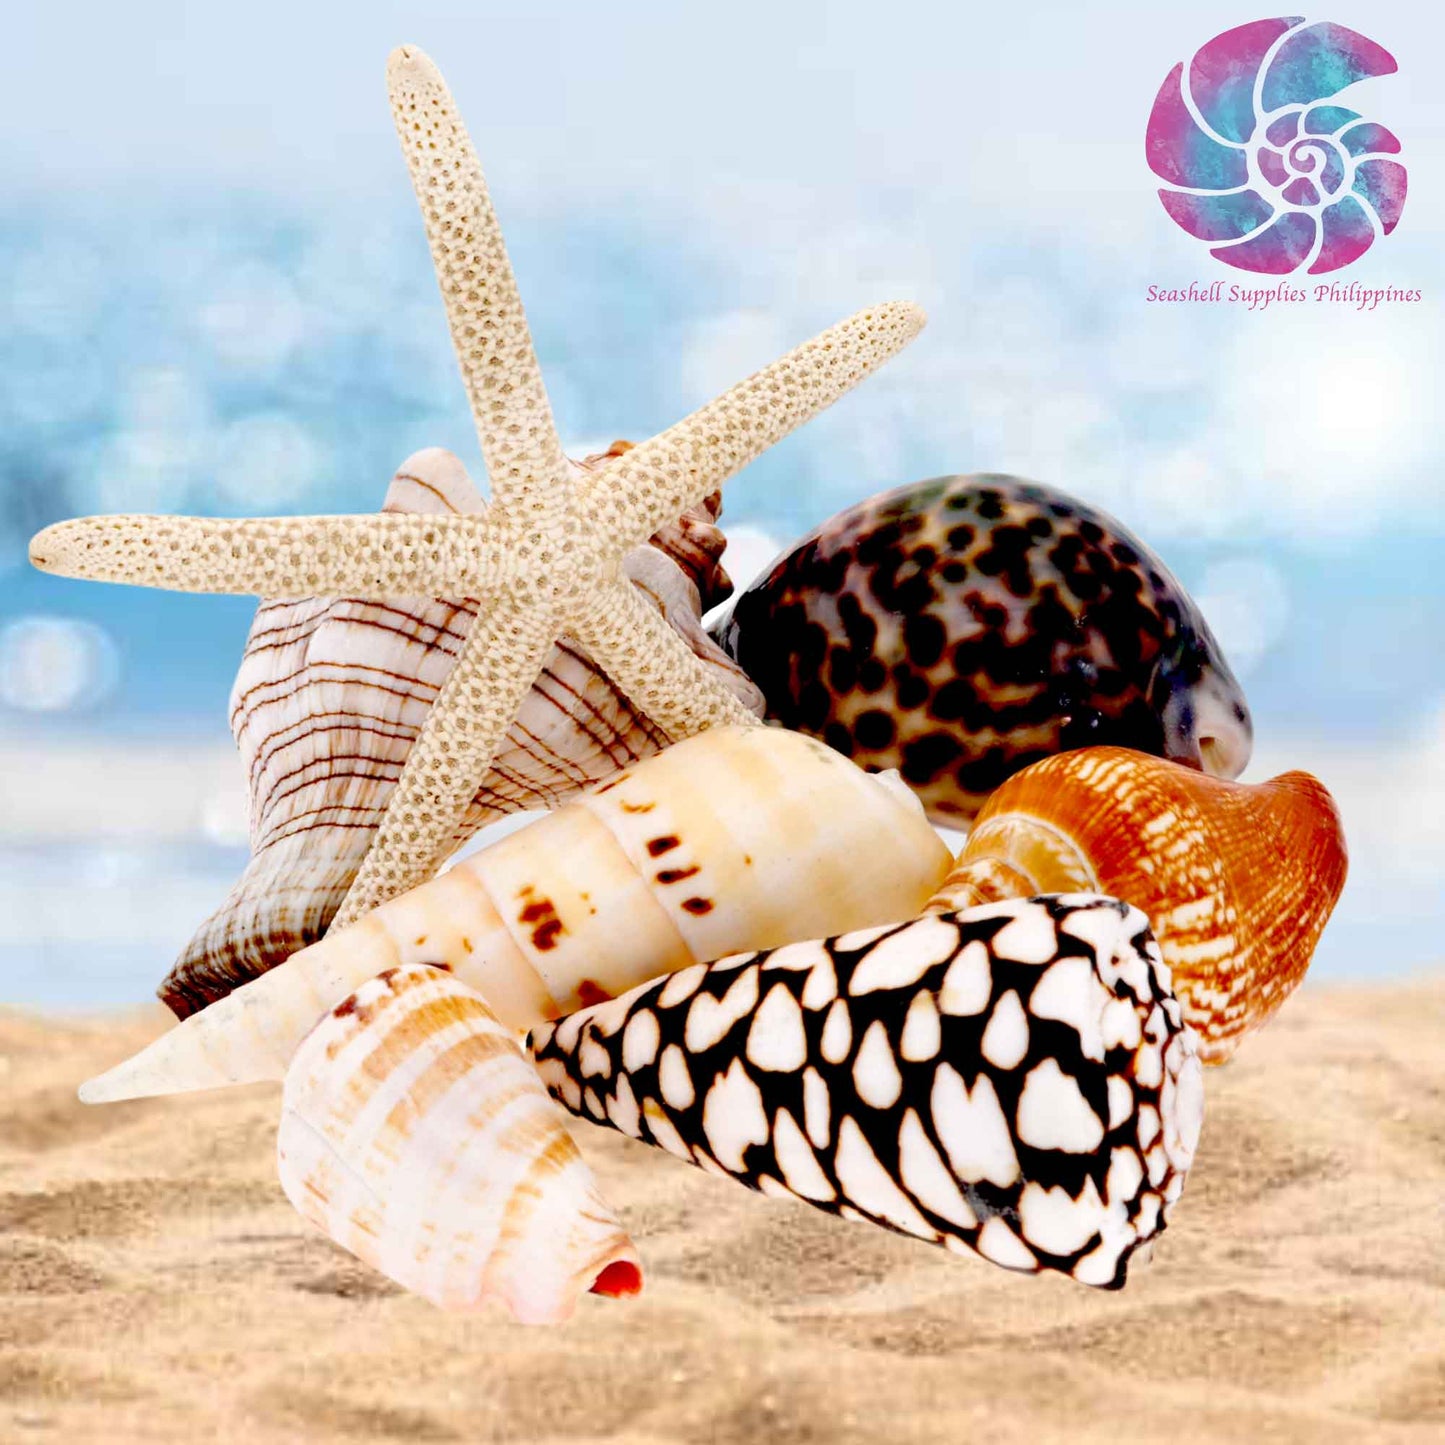 Beach Mixed Seashells in Organza Pouch Bag with Starfish | Shell Crafts | Aquarium Decor | 350 grams